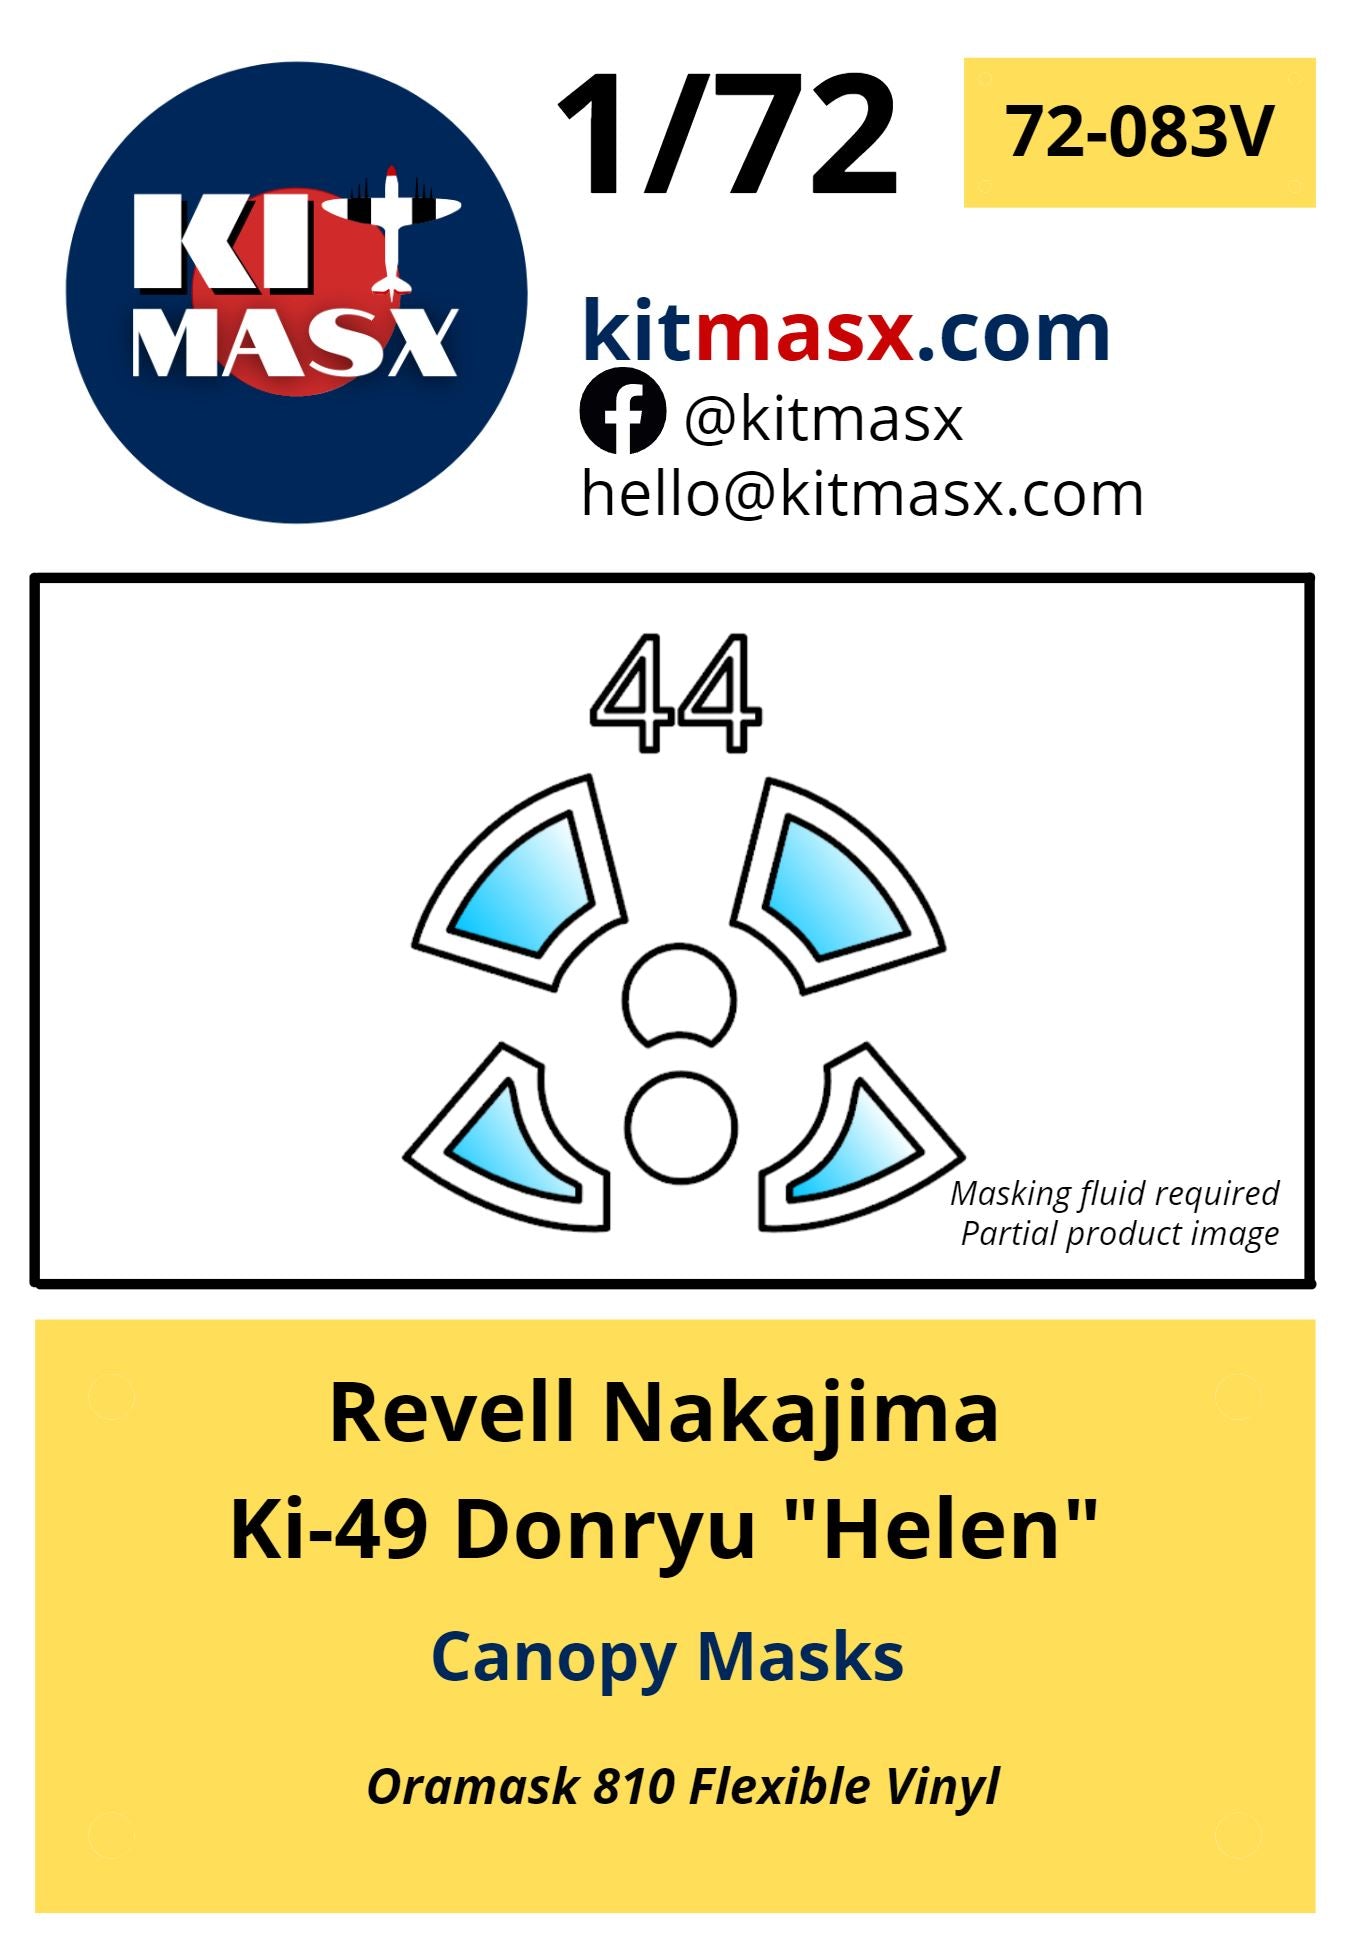 Revell Nakajima Ki-49 Donryu "Helen" Canopy Masks Kit Masx 